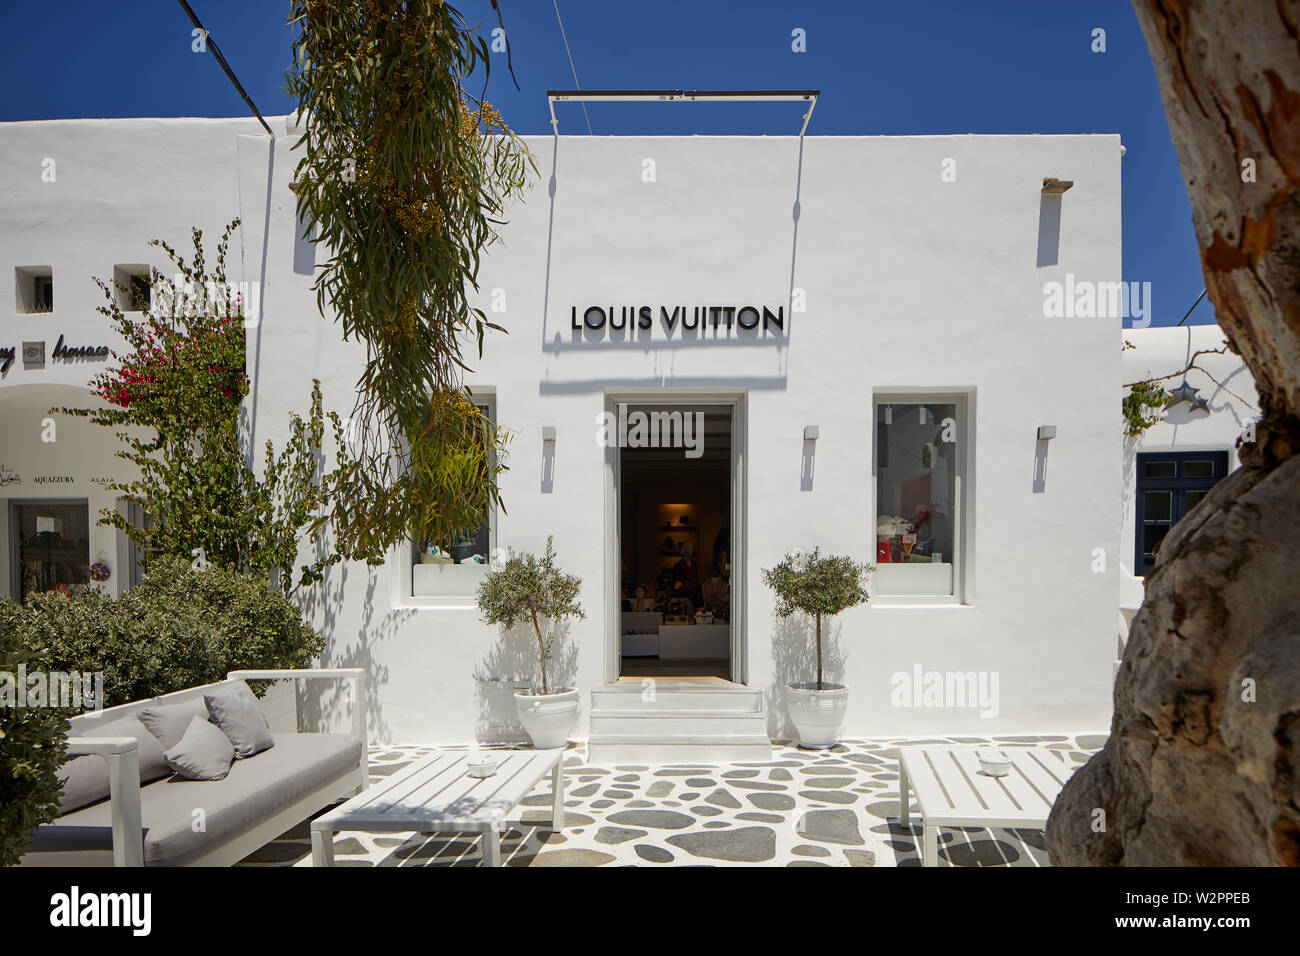 Mykonos, mikonos Greek island, part of the Cyclades, Greece. souk shop form designer handbag brand Louis Vuitton Stock Photo